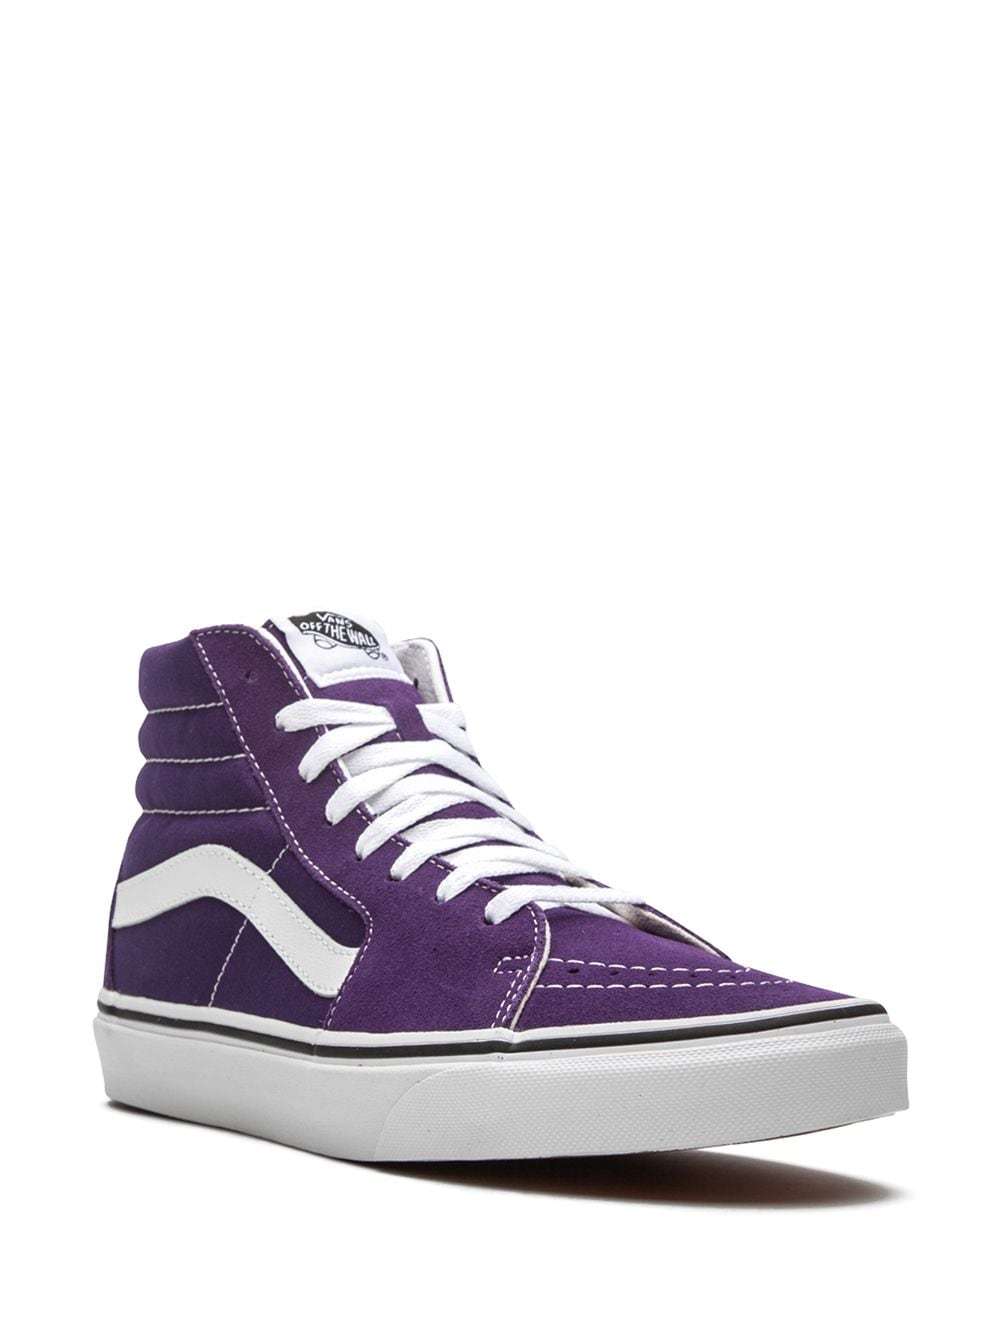 مكيف هاس سبليت Vans Sk8 Hi Violet Indigo Sneakers, $69 | farfetch.com | Lookastic مكيف هاس سبليت